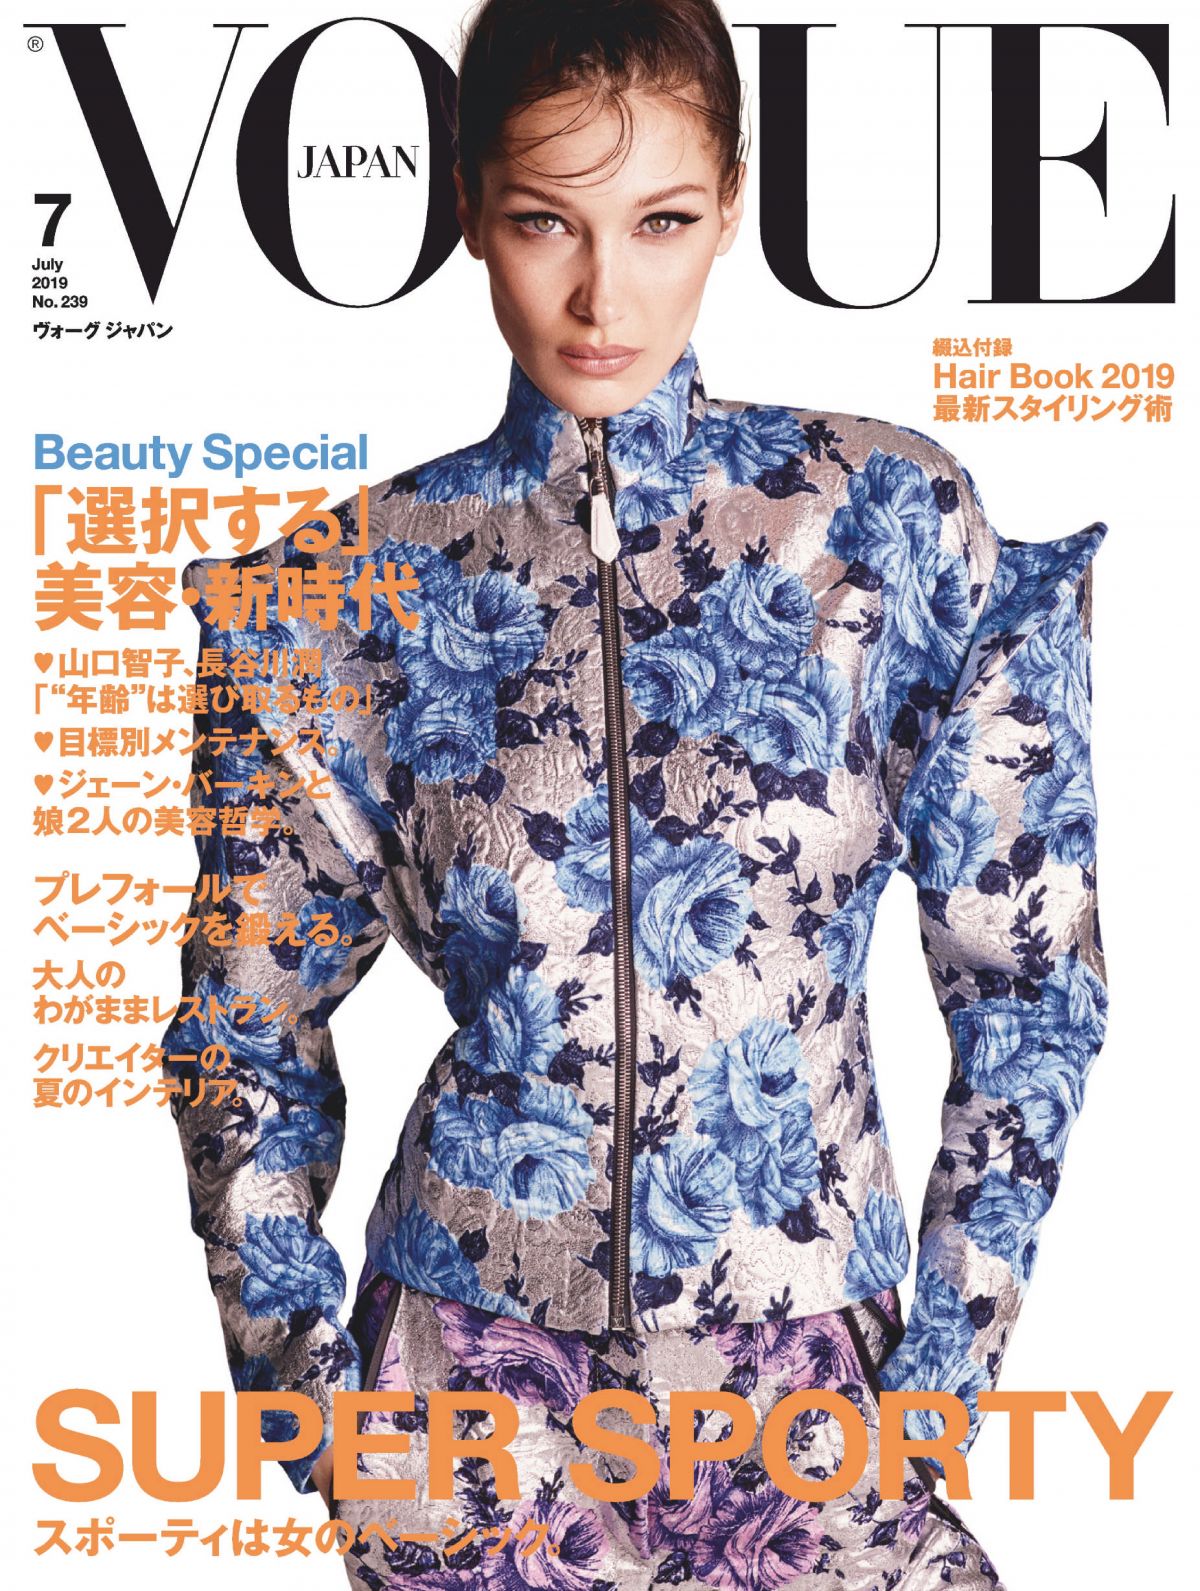 bella-hadid-in-vogue-magazine-japan-july-2019-8.jpg